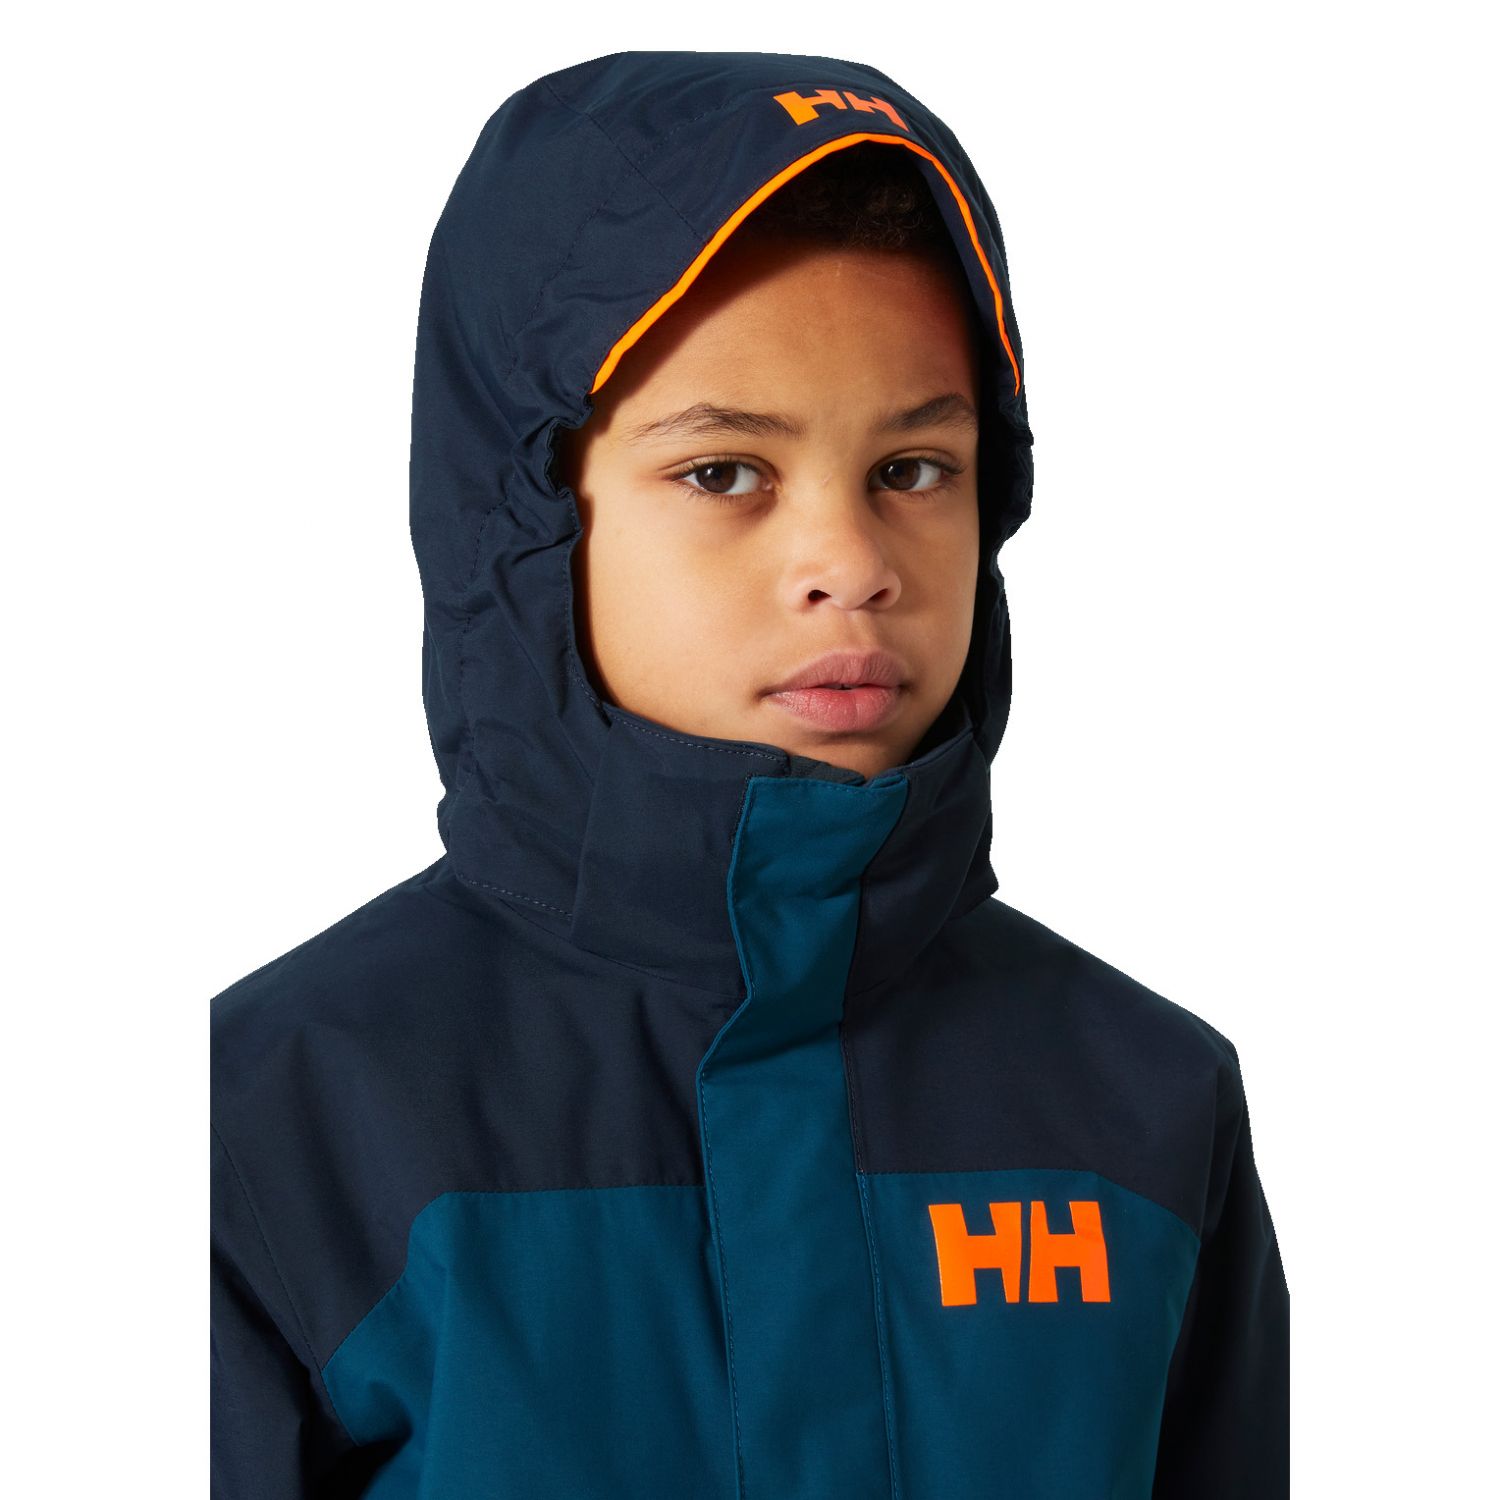 Helly Hansen Level, veste de ski, junior, bleu foncé